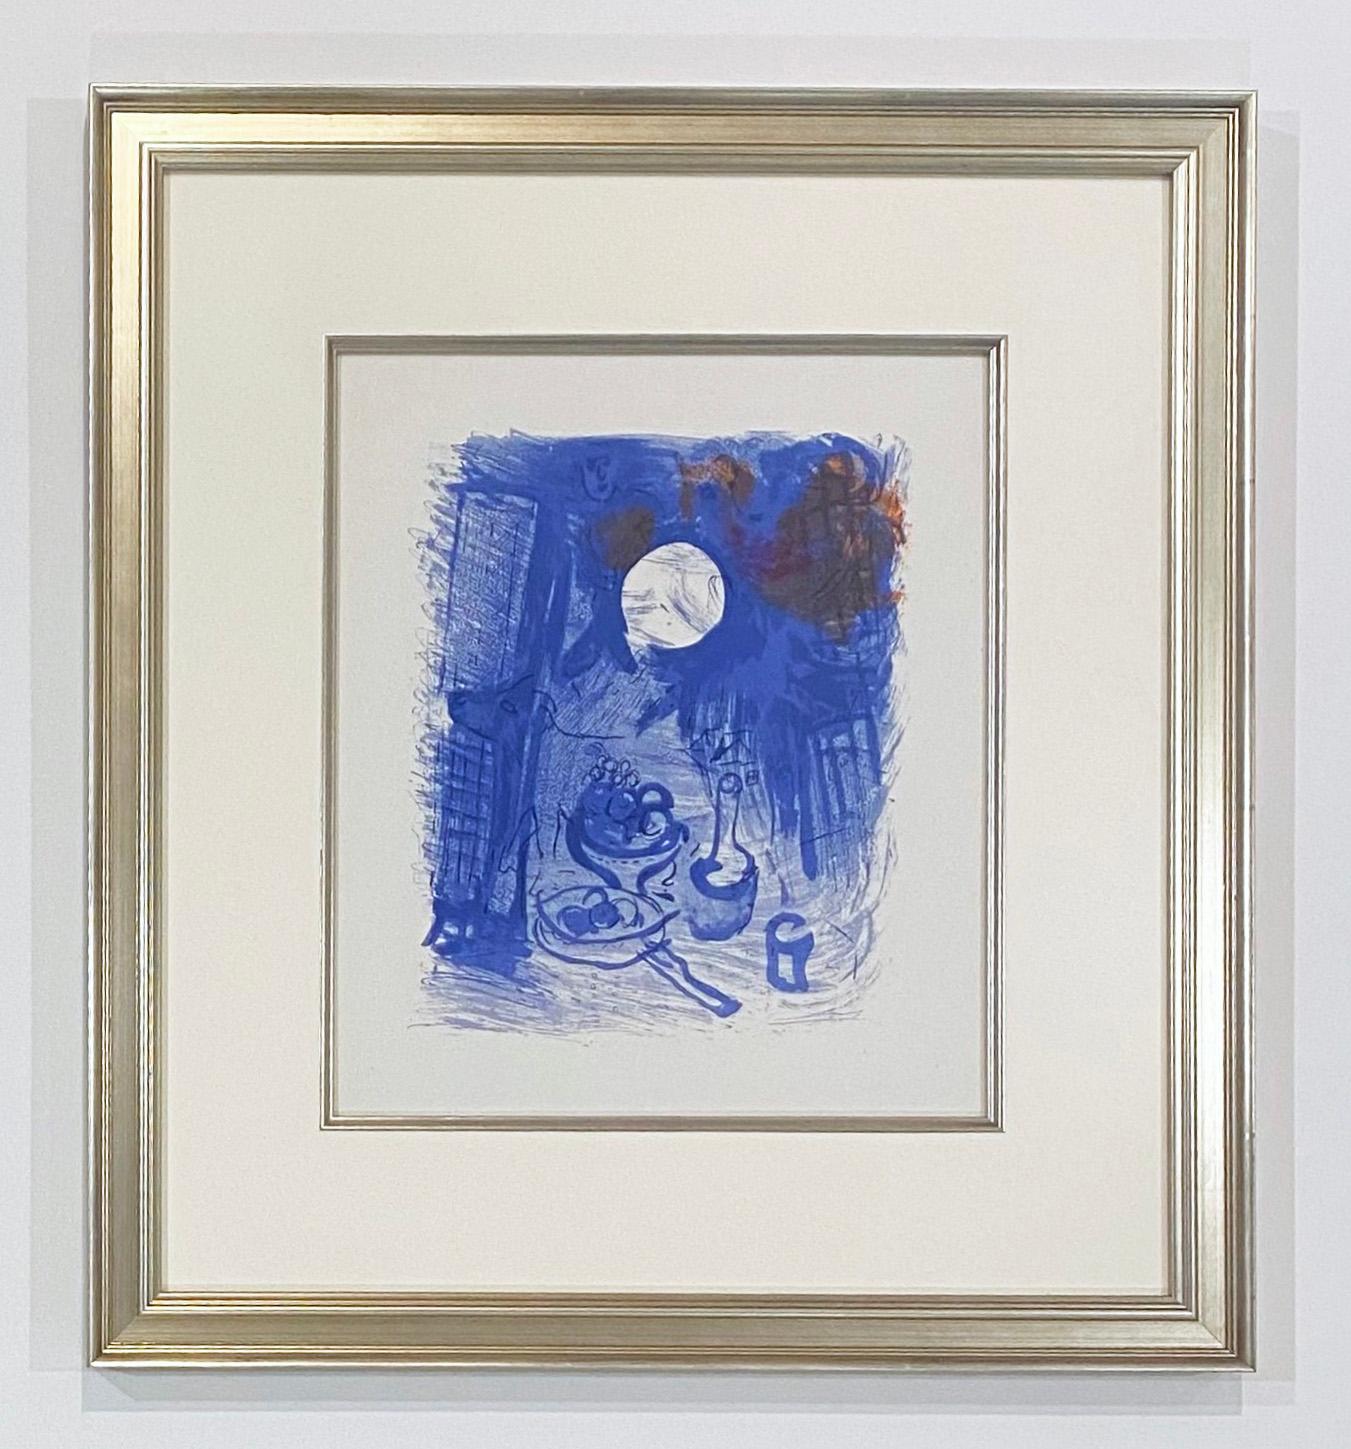 Marc Chagall Blue Still Life
Artist: Marc Chagall
Medium: Original lithograph
Title: Blue Still Life (Derriere le Miroir 99-100)
Portfolio: Derriere le Miroir
Year: 1957
Edition: 2500
Framed Size: 19.5